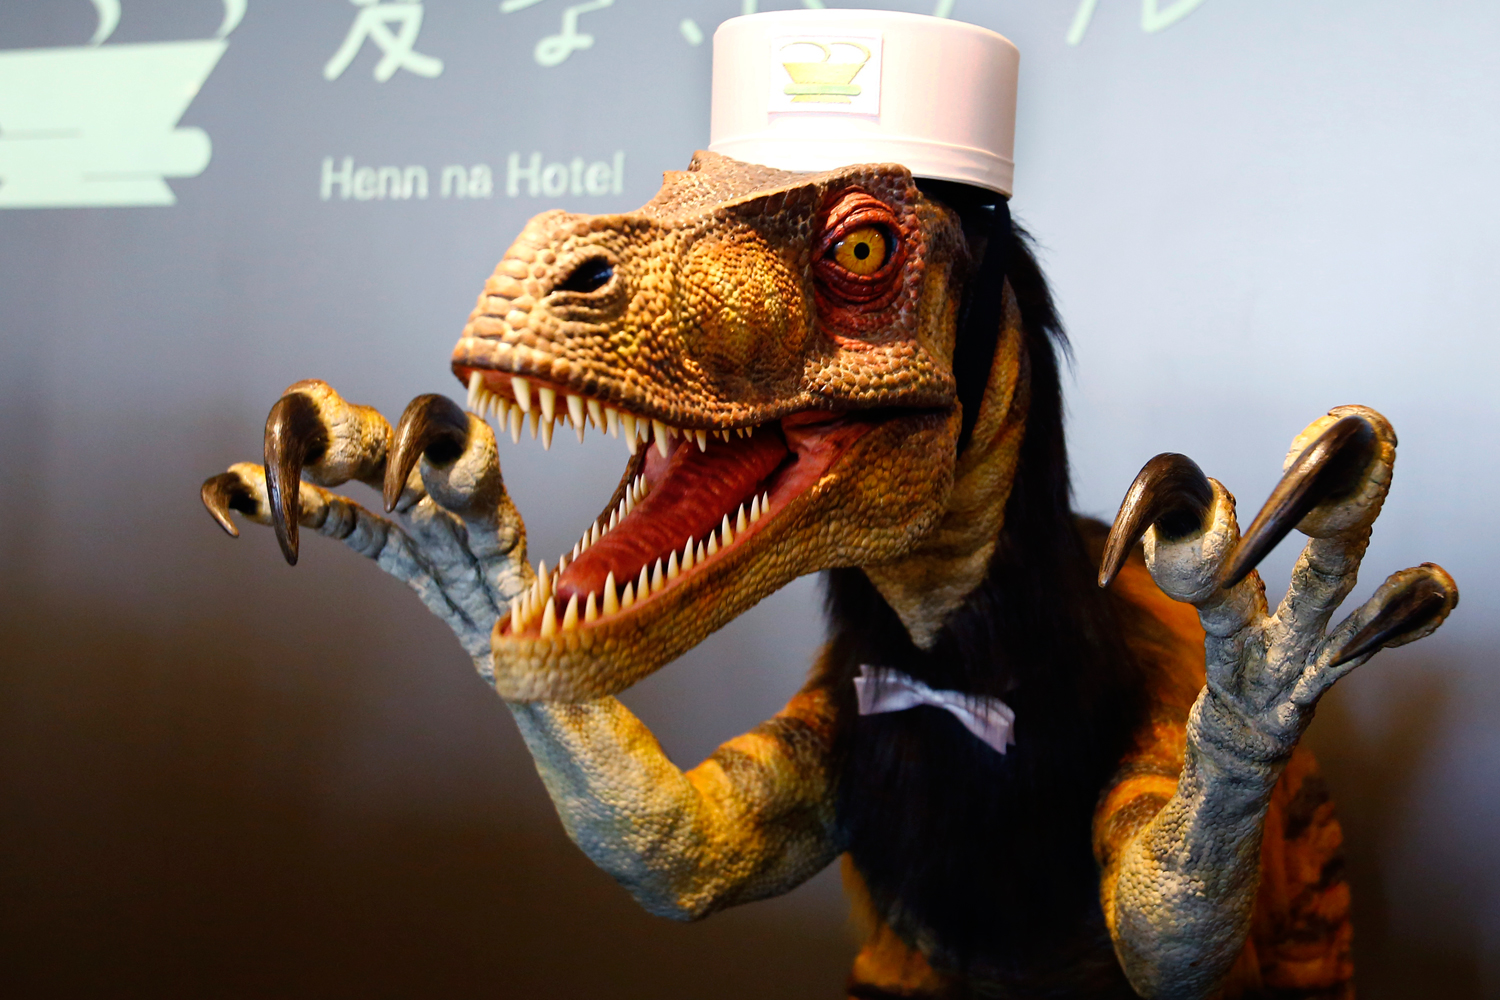 A receptionist dinosaur robot performs at the new robot hotel, aptly called Henn na Hotel or Weird Hotel, in Sasebo, southwestern Japan, July 15, 2015. (Shizuo Kambayashi—AP)